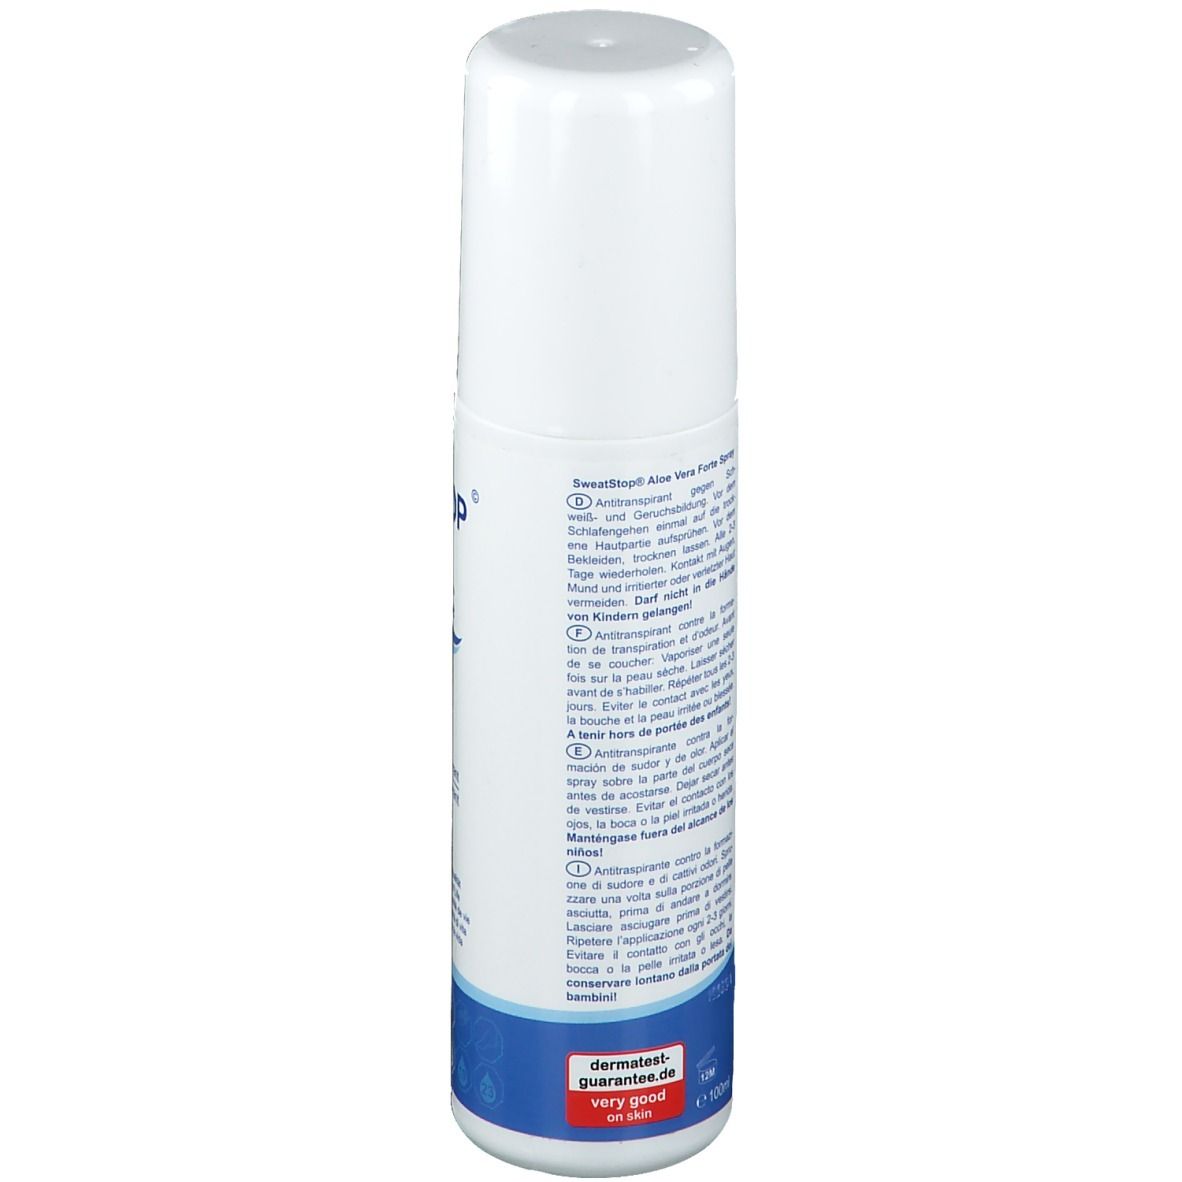 SweatStop® Aloe Vera Forte Spray antitranspirant